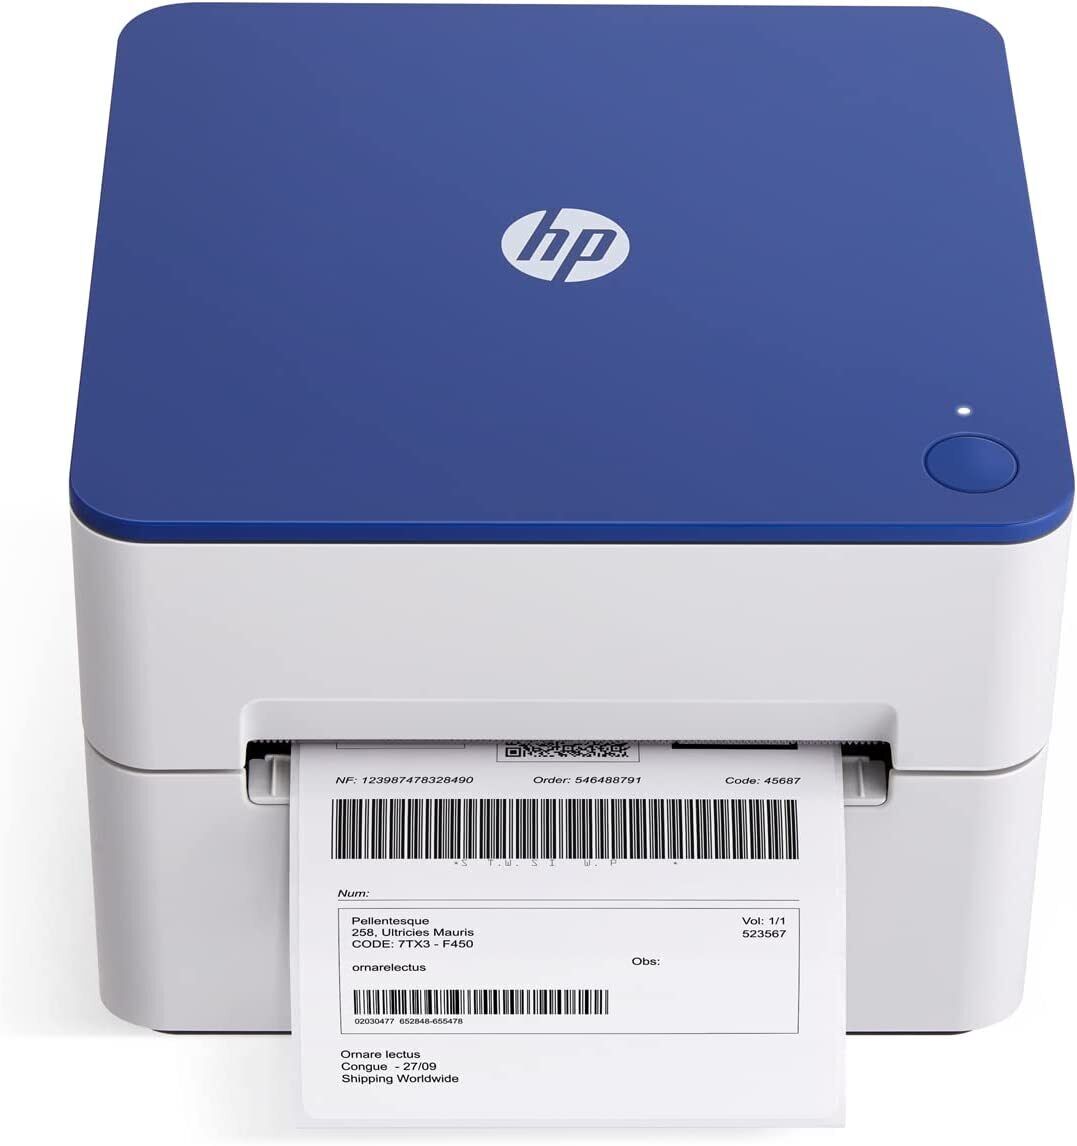 HP Direct Thermal Label Printer KE200 USB, Shipping, Barcode, & More